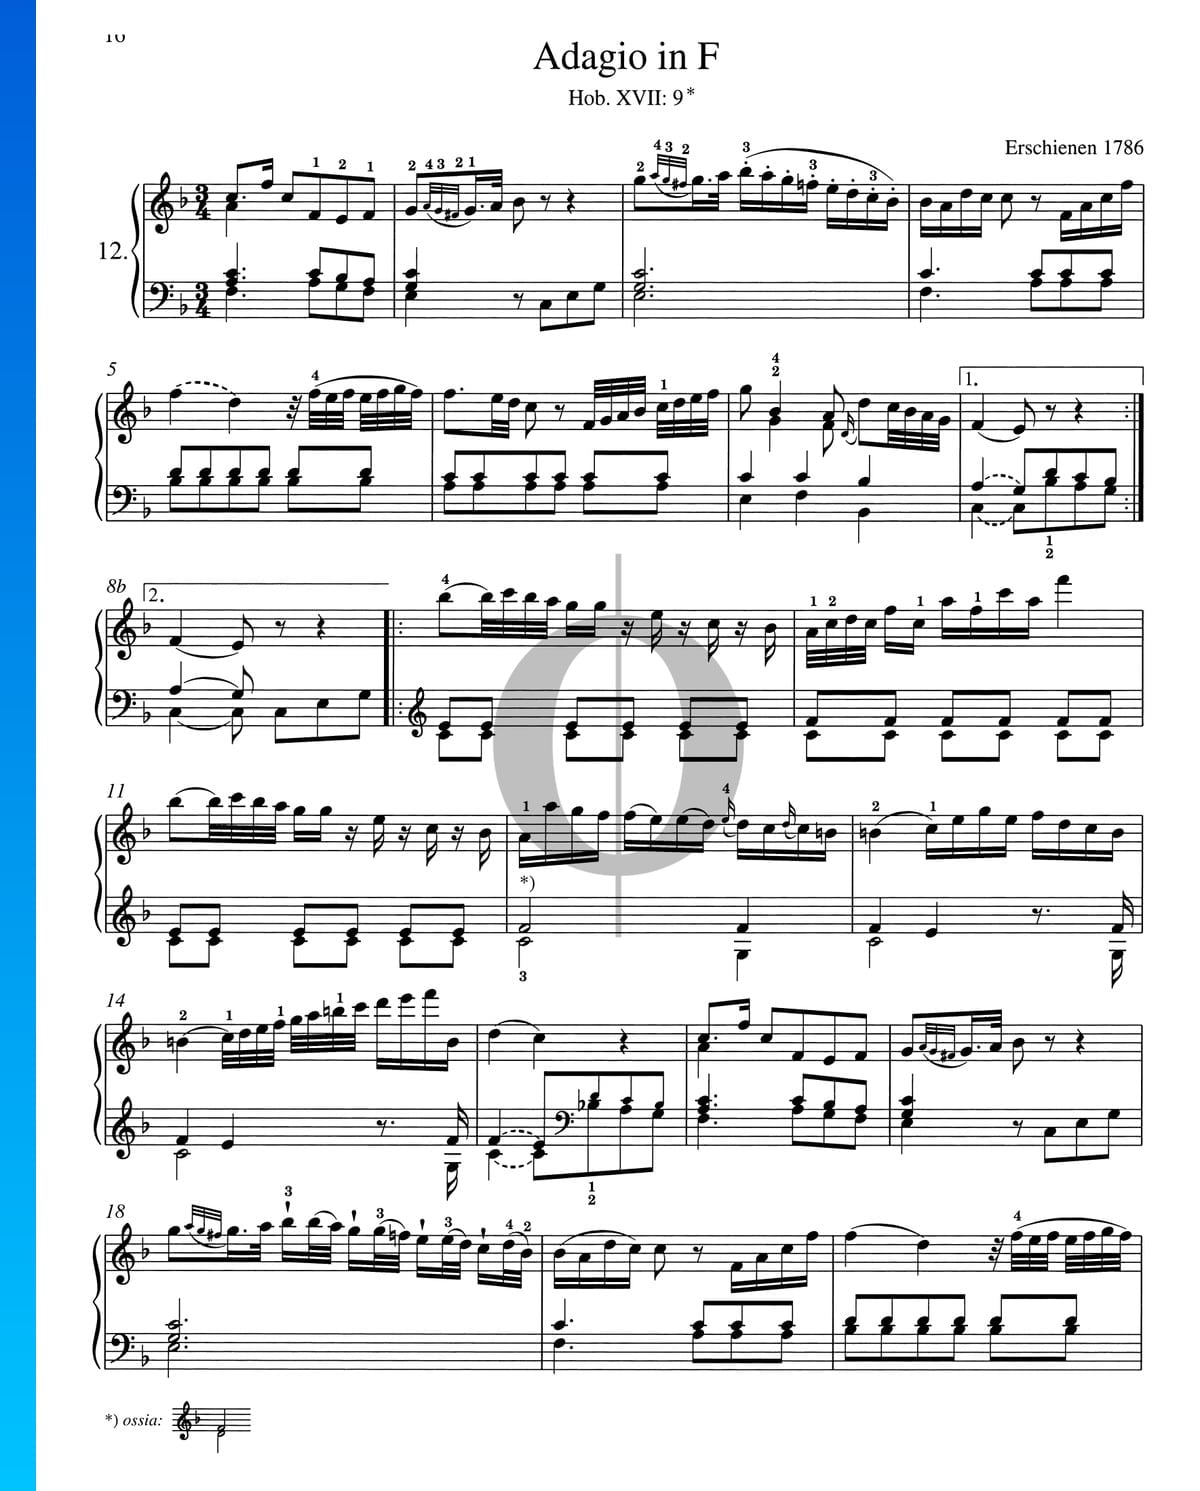 Adagio in F Major, Hob. XVII: 9 Sheet Music (Piano Solo) - OKTAV